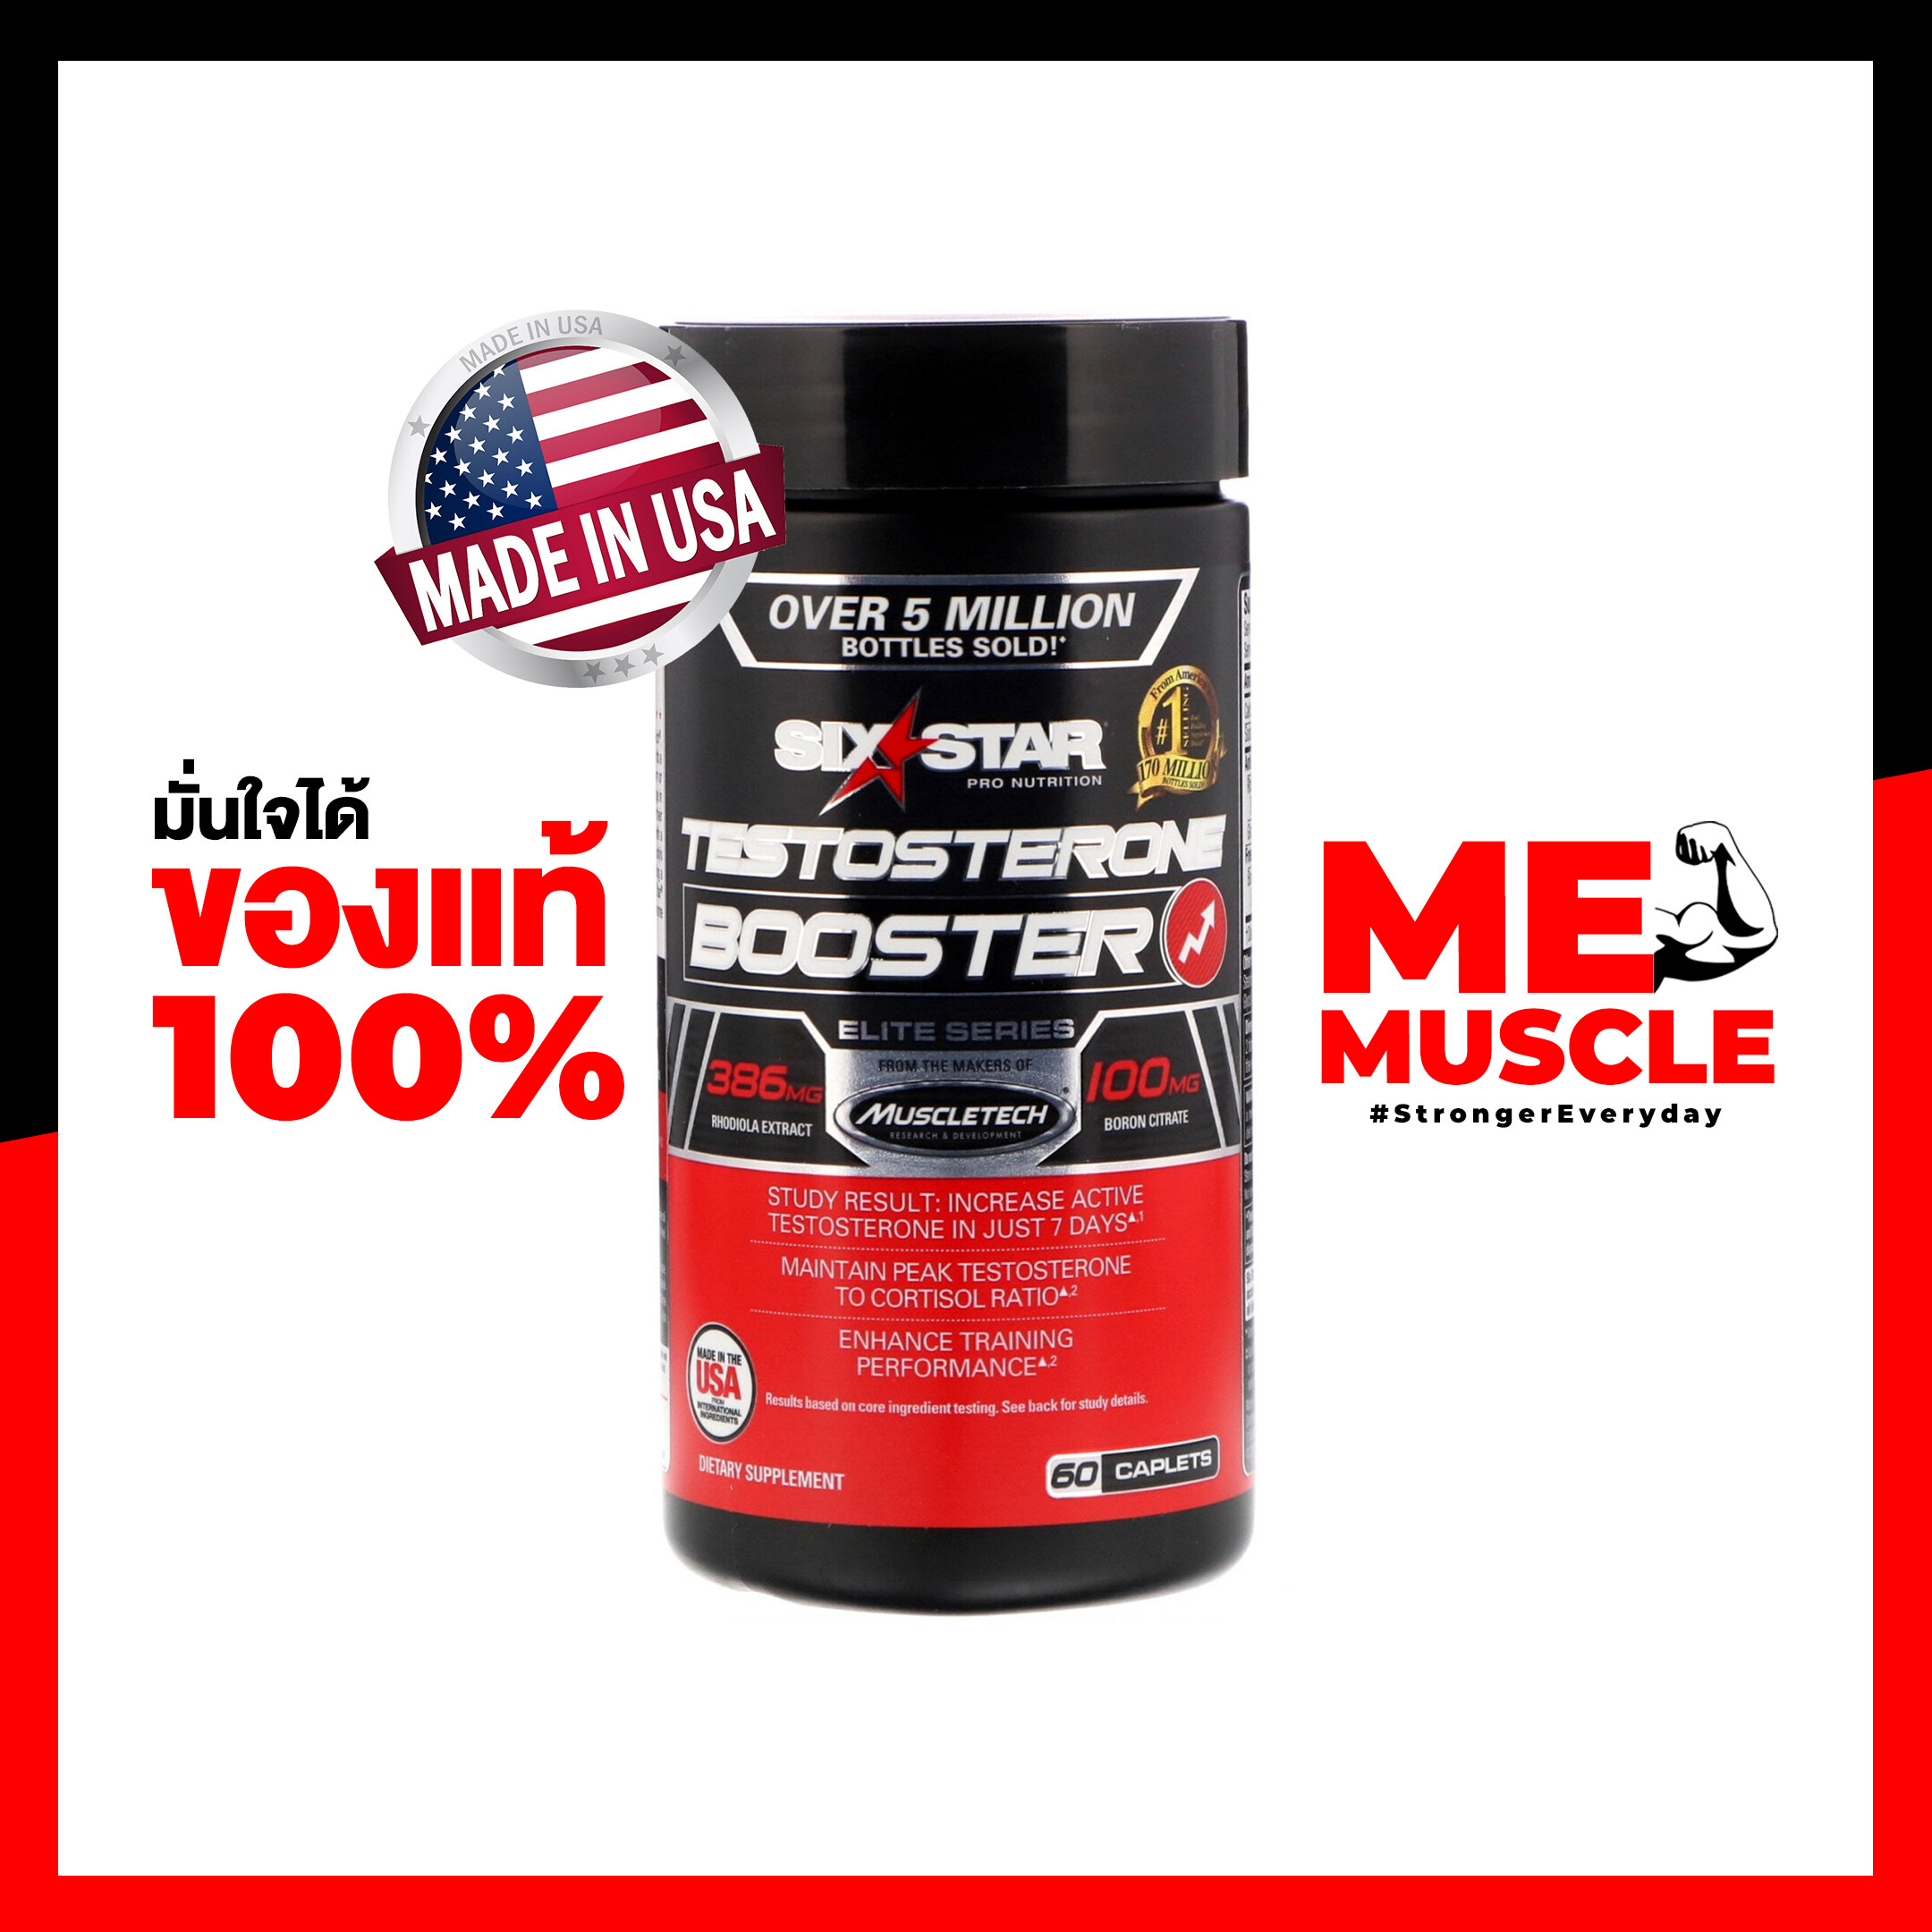 MuscleTech SixStar Testosterone Booster 60 capsules อาหารเสริมคุณภาพ Made in USA รวมสารอาหารสำคัญและปลอดภัย ที่ช่วยเพิ่มระดับ Testosterone